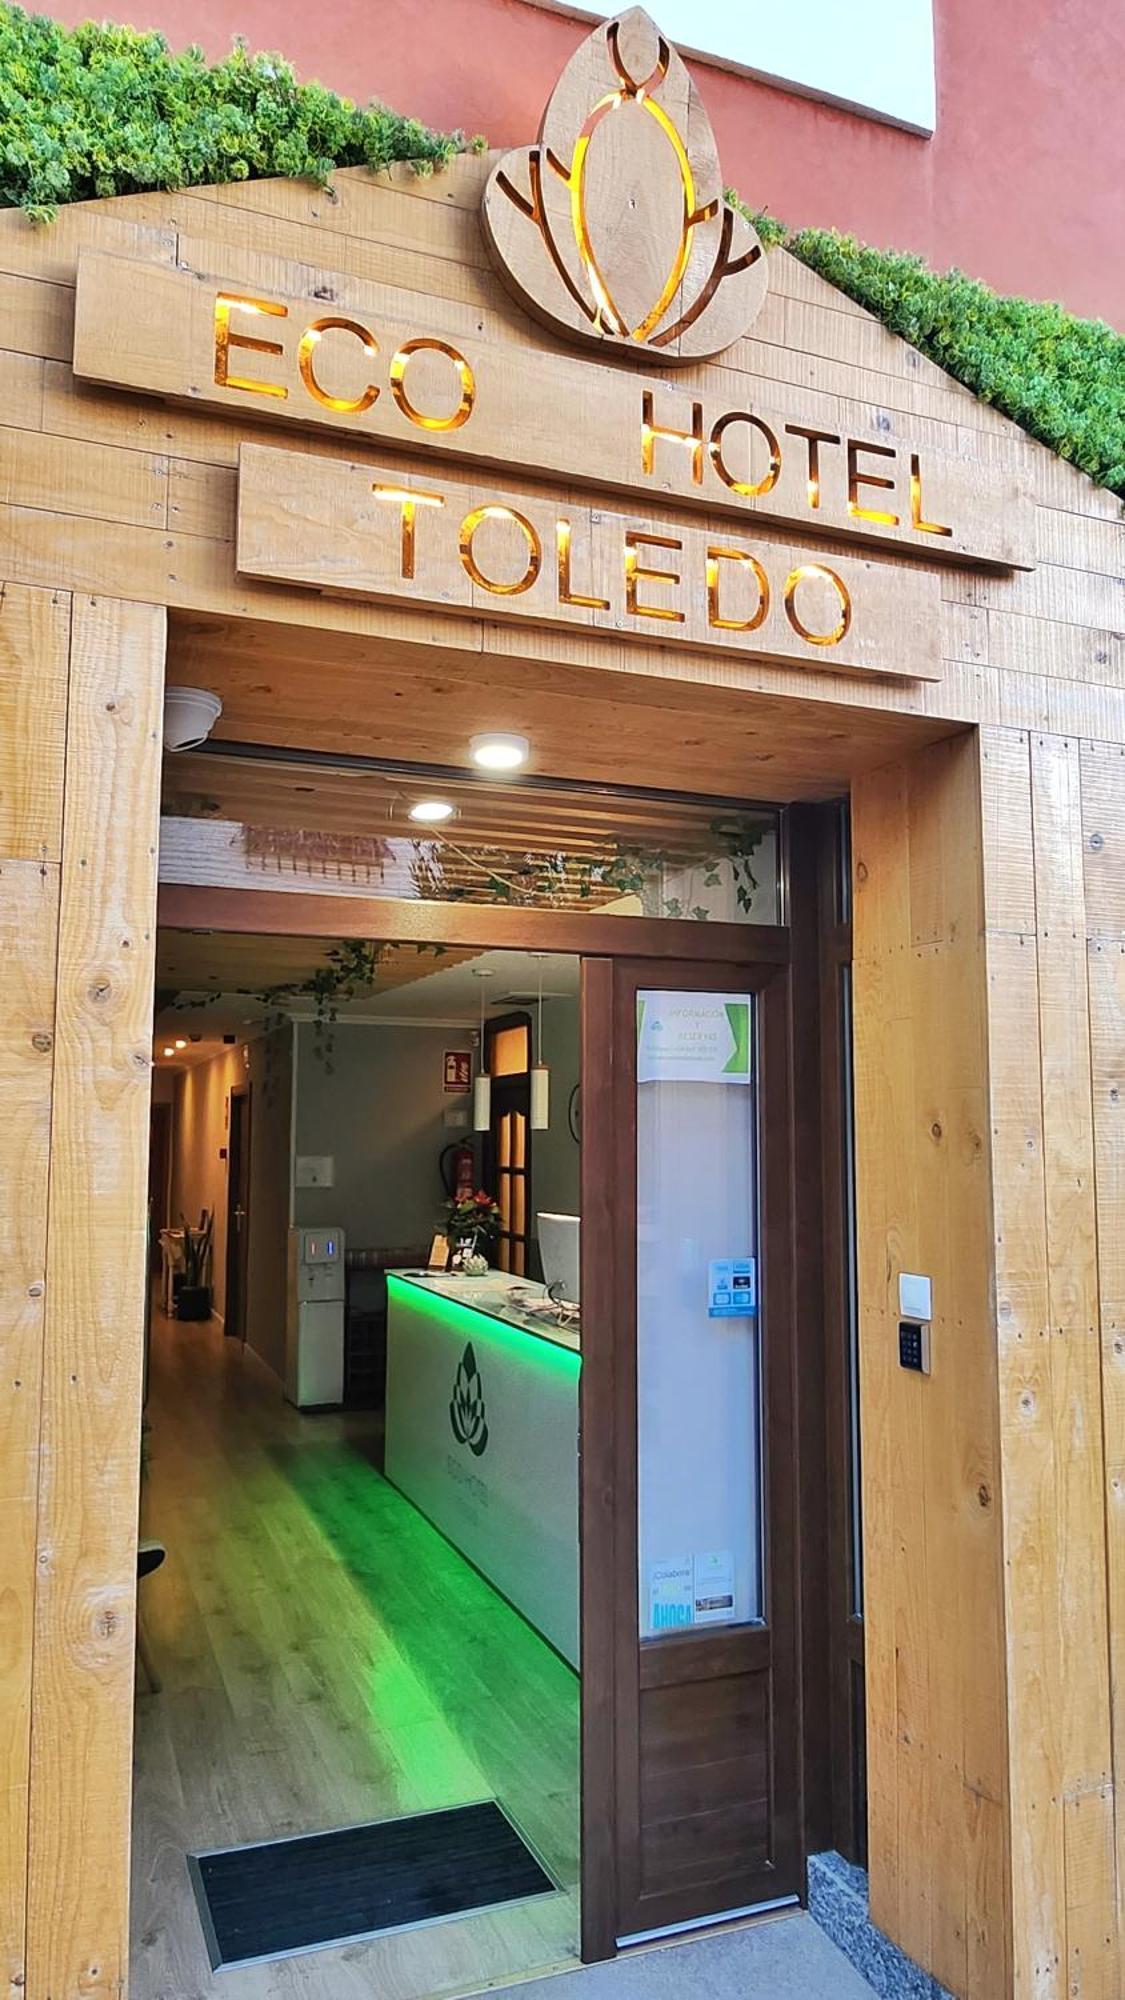 Eco Hotel Toledo Exterior foto